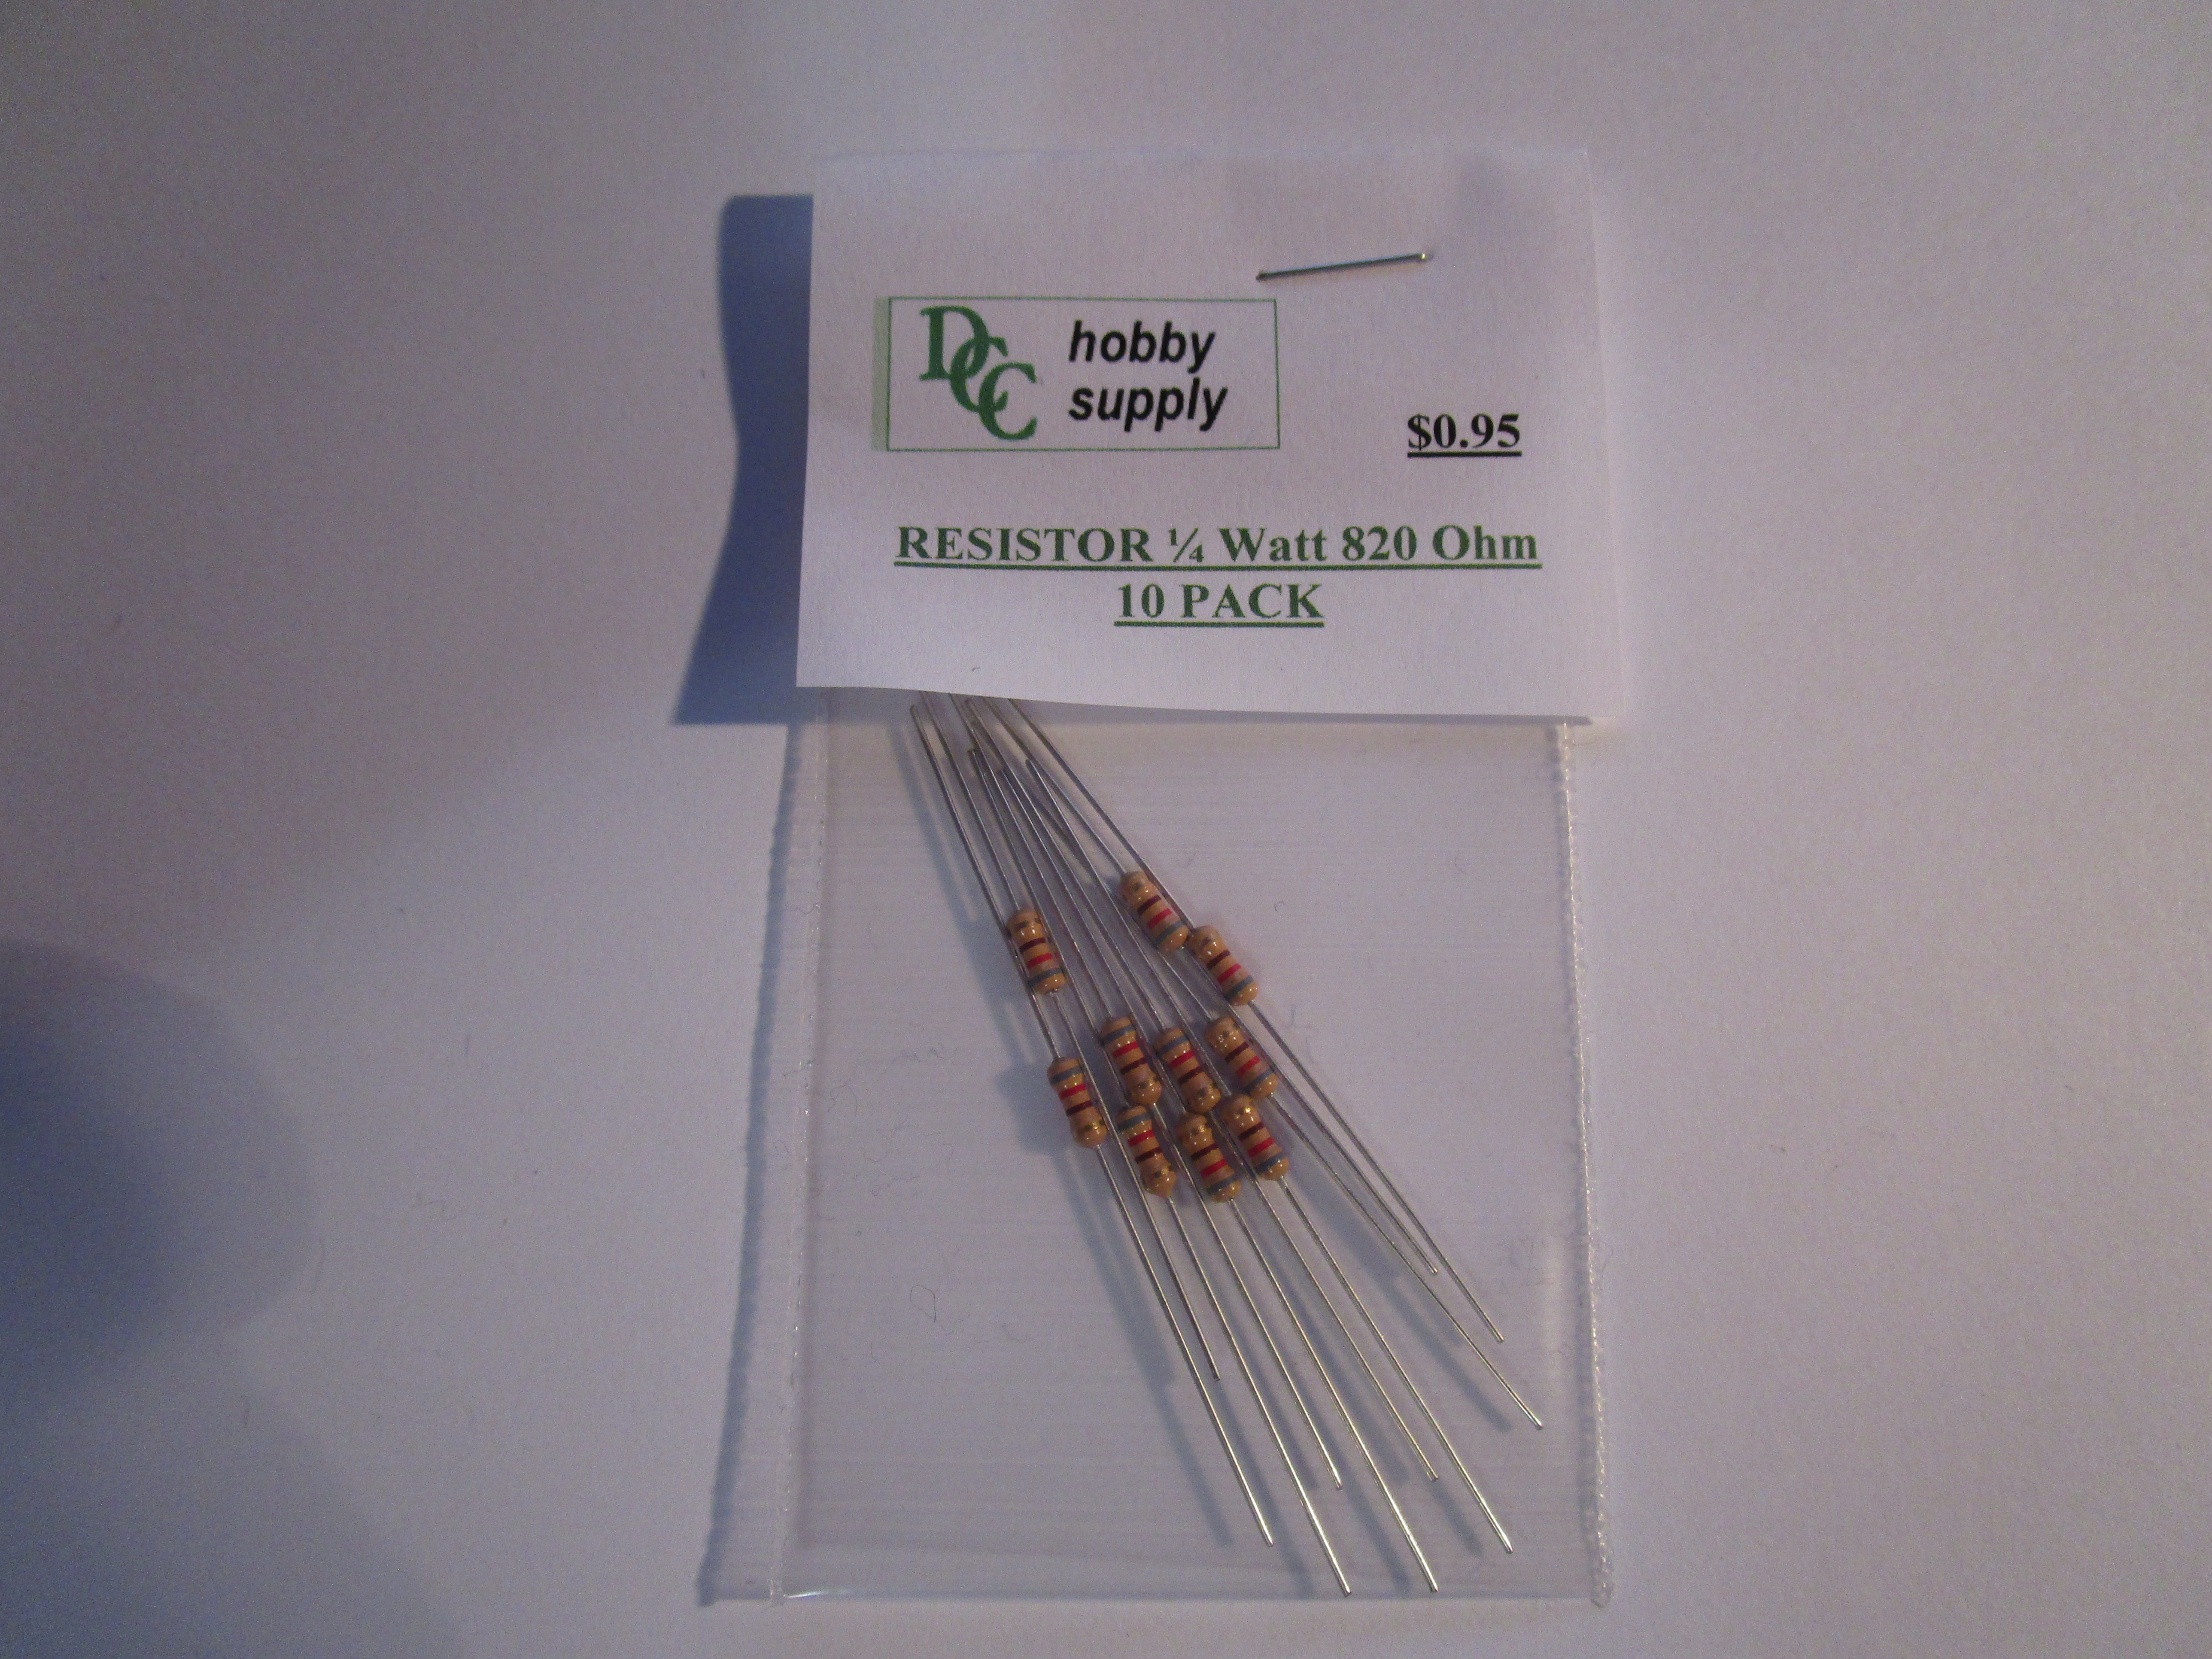 Resistor, 1/4 watt 820 Ohm (10 pack)